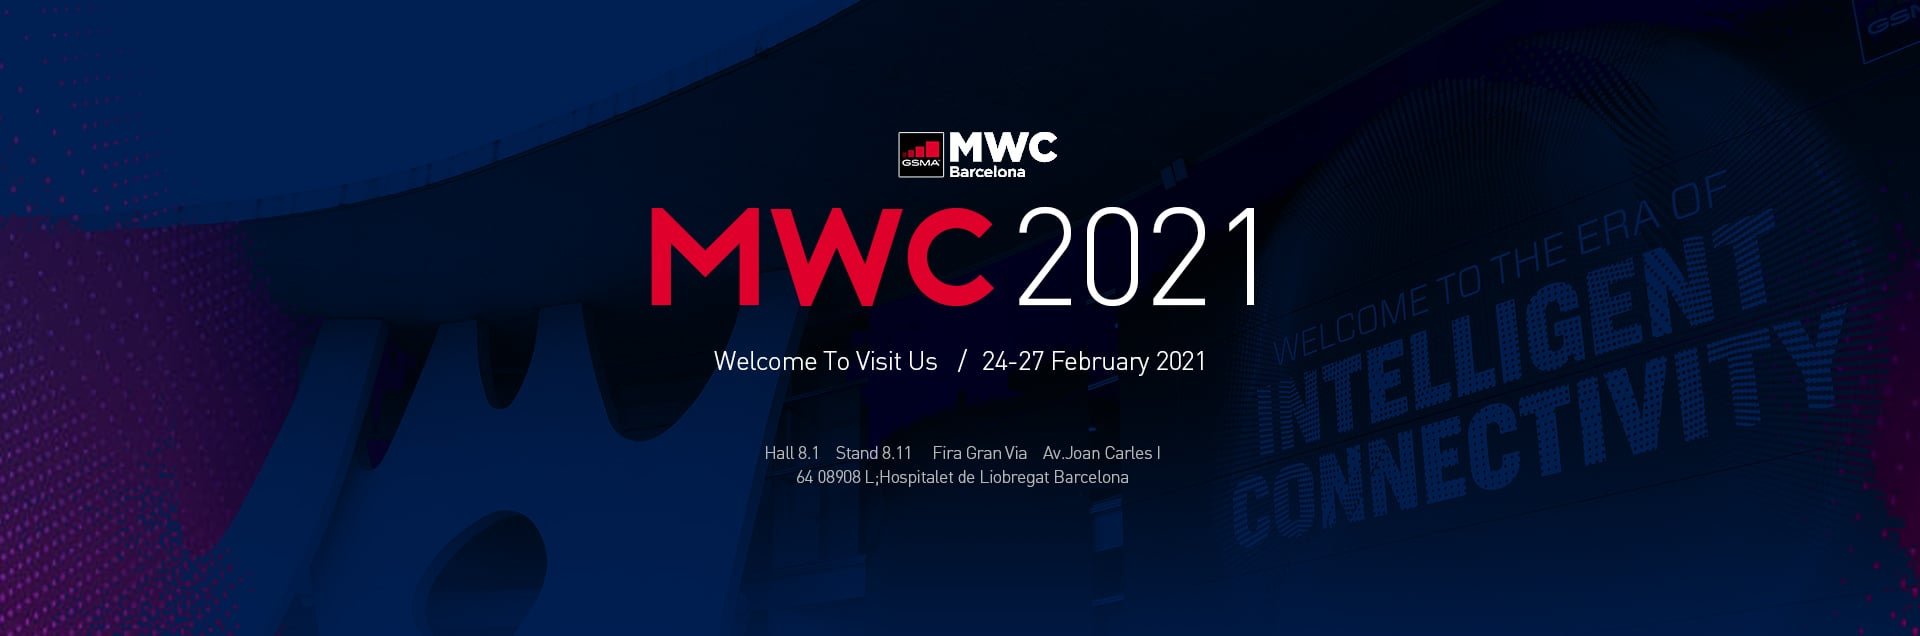 MWC 2021